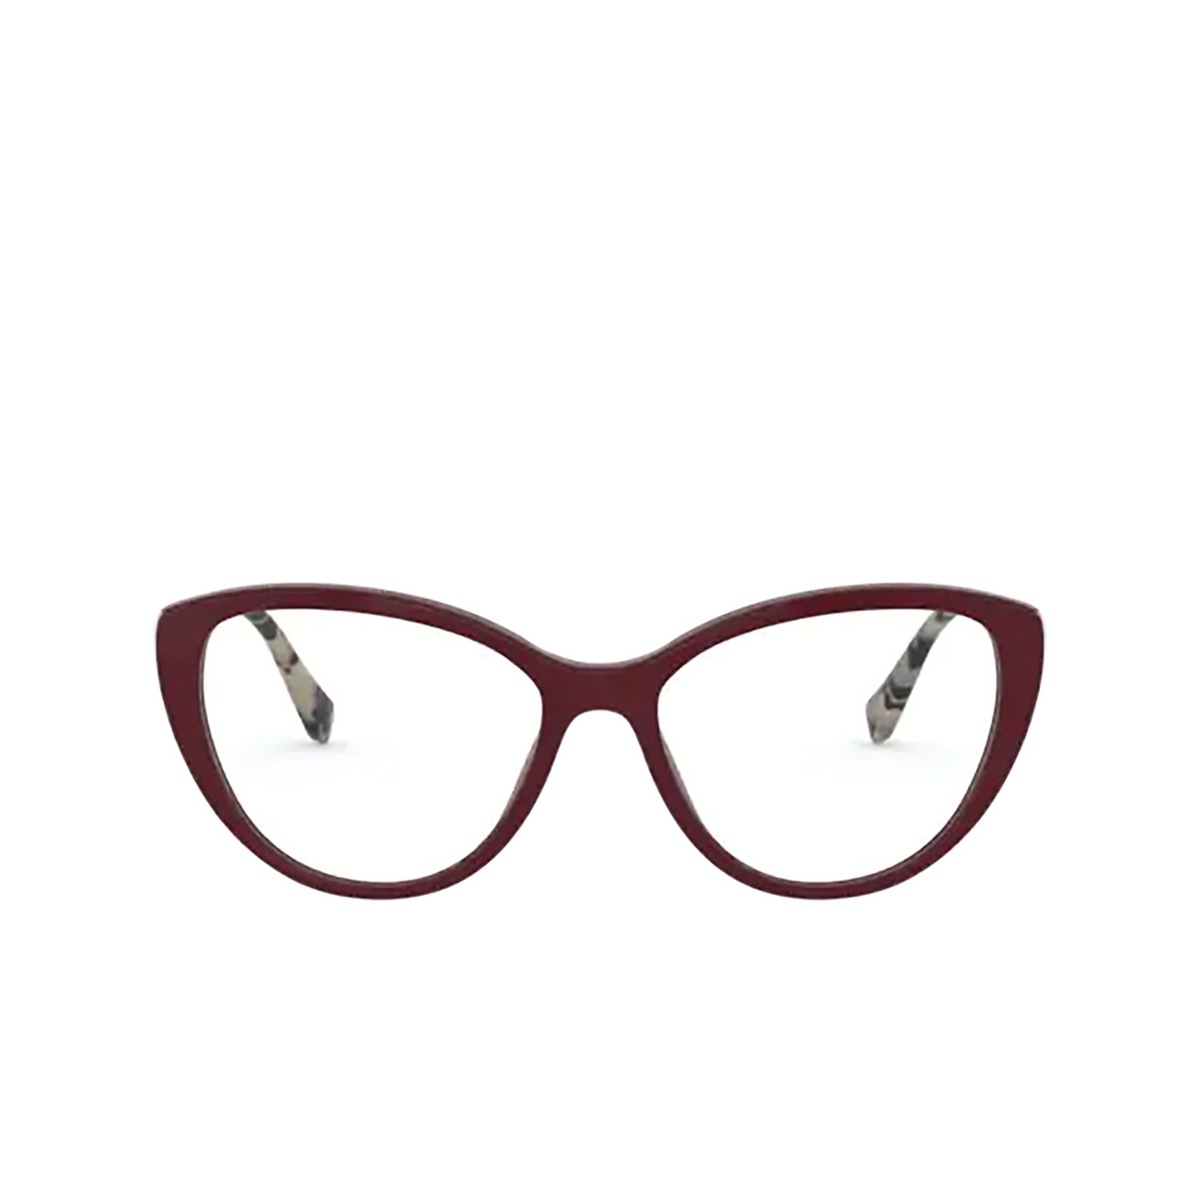 Miu Miu® Cat-eye Eyeglasses: MU 02SV color Bordeaux USH1O1 - front view.